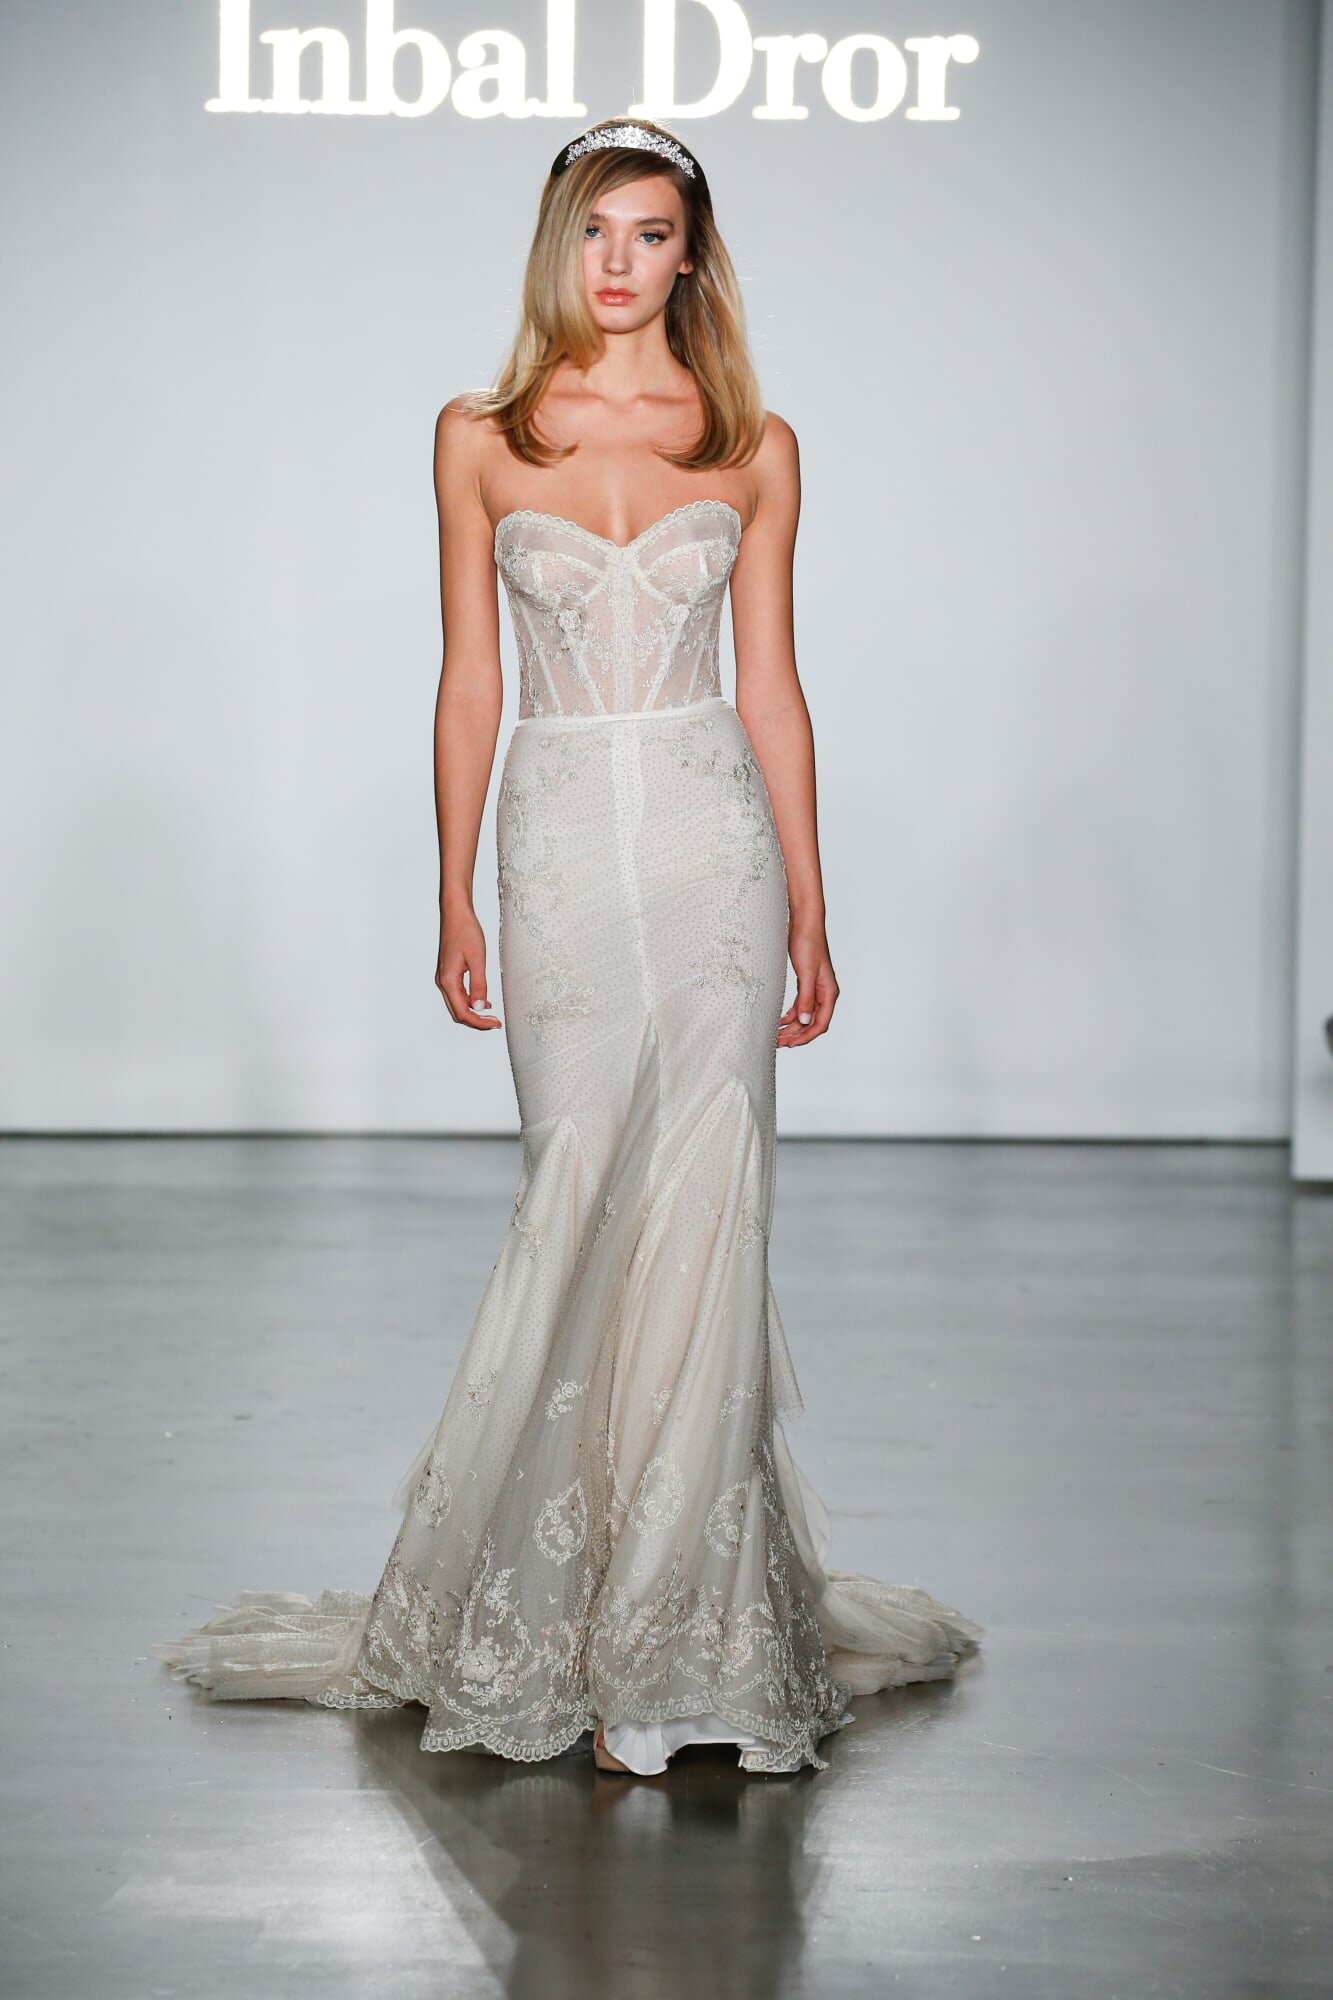 inbal-dror-bridal-fall-2020-corset-wedding-dress.jpg